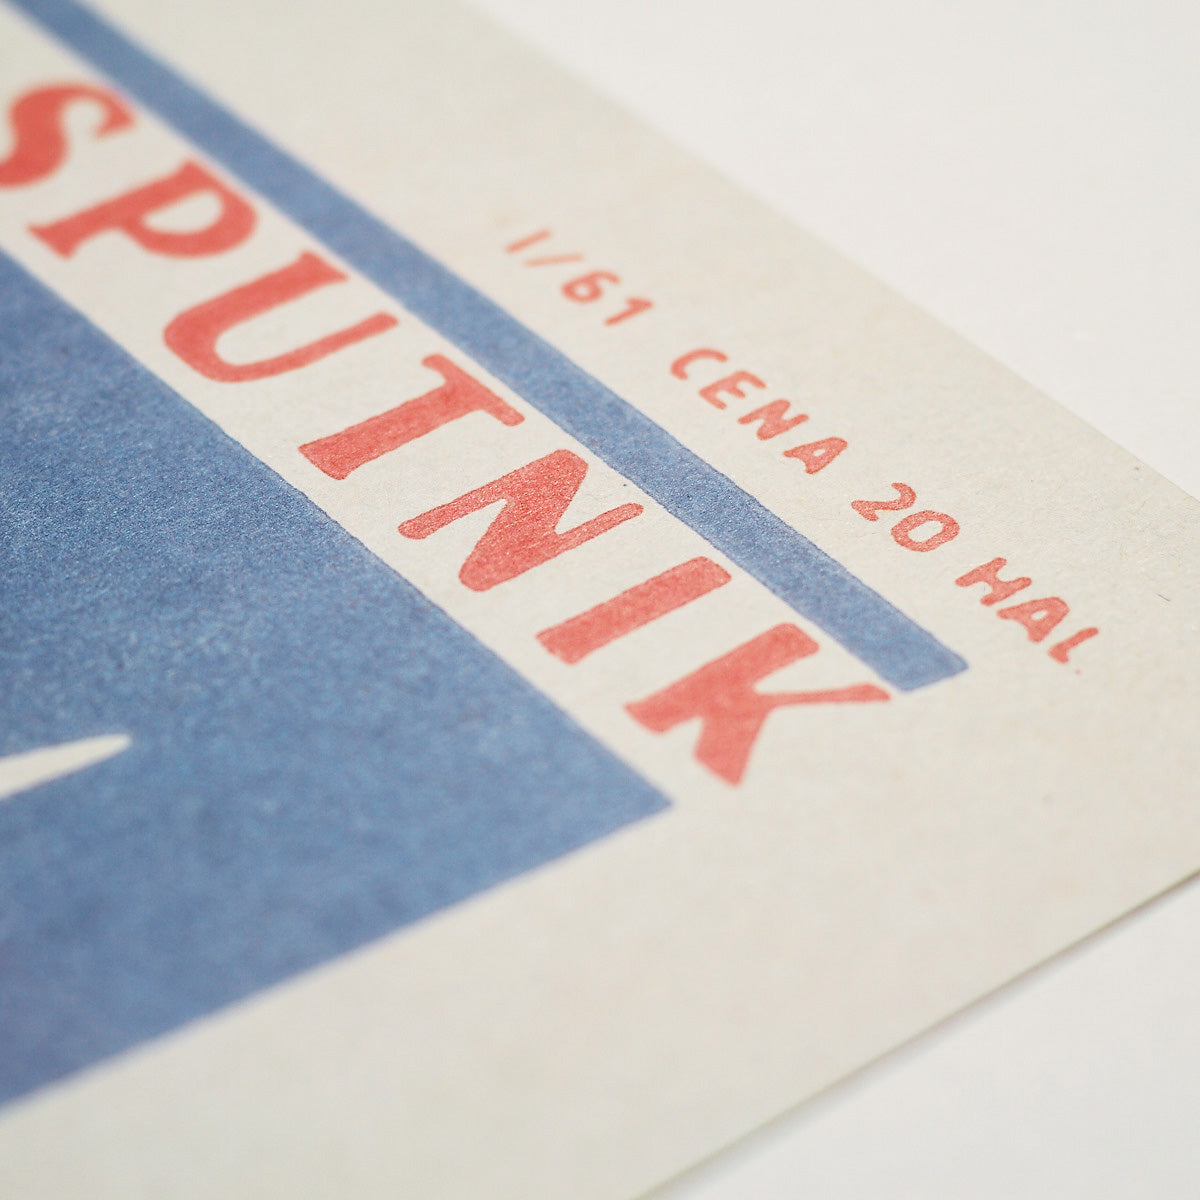 Sputnik - Poster 30x40 cm 